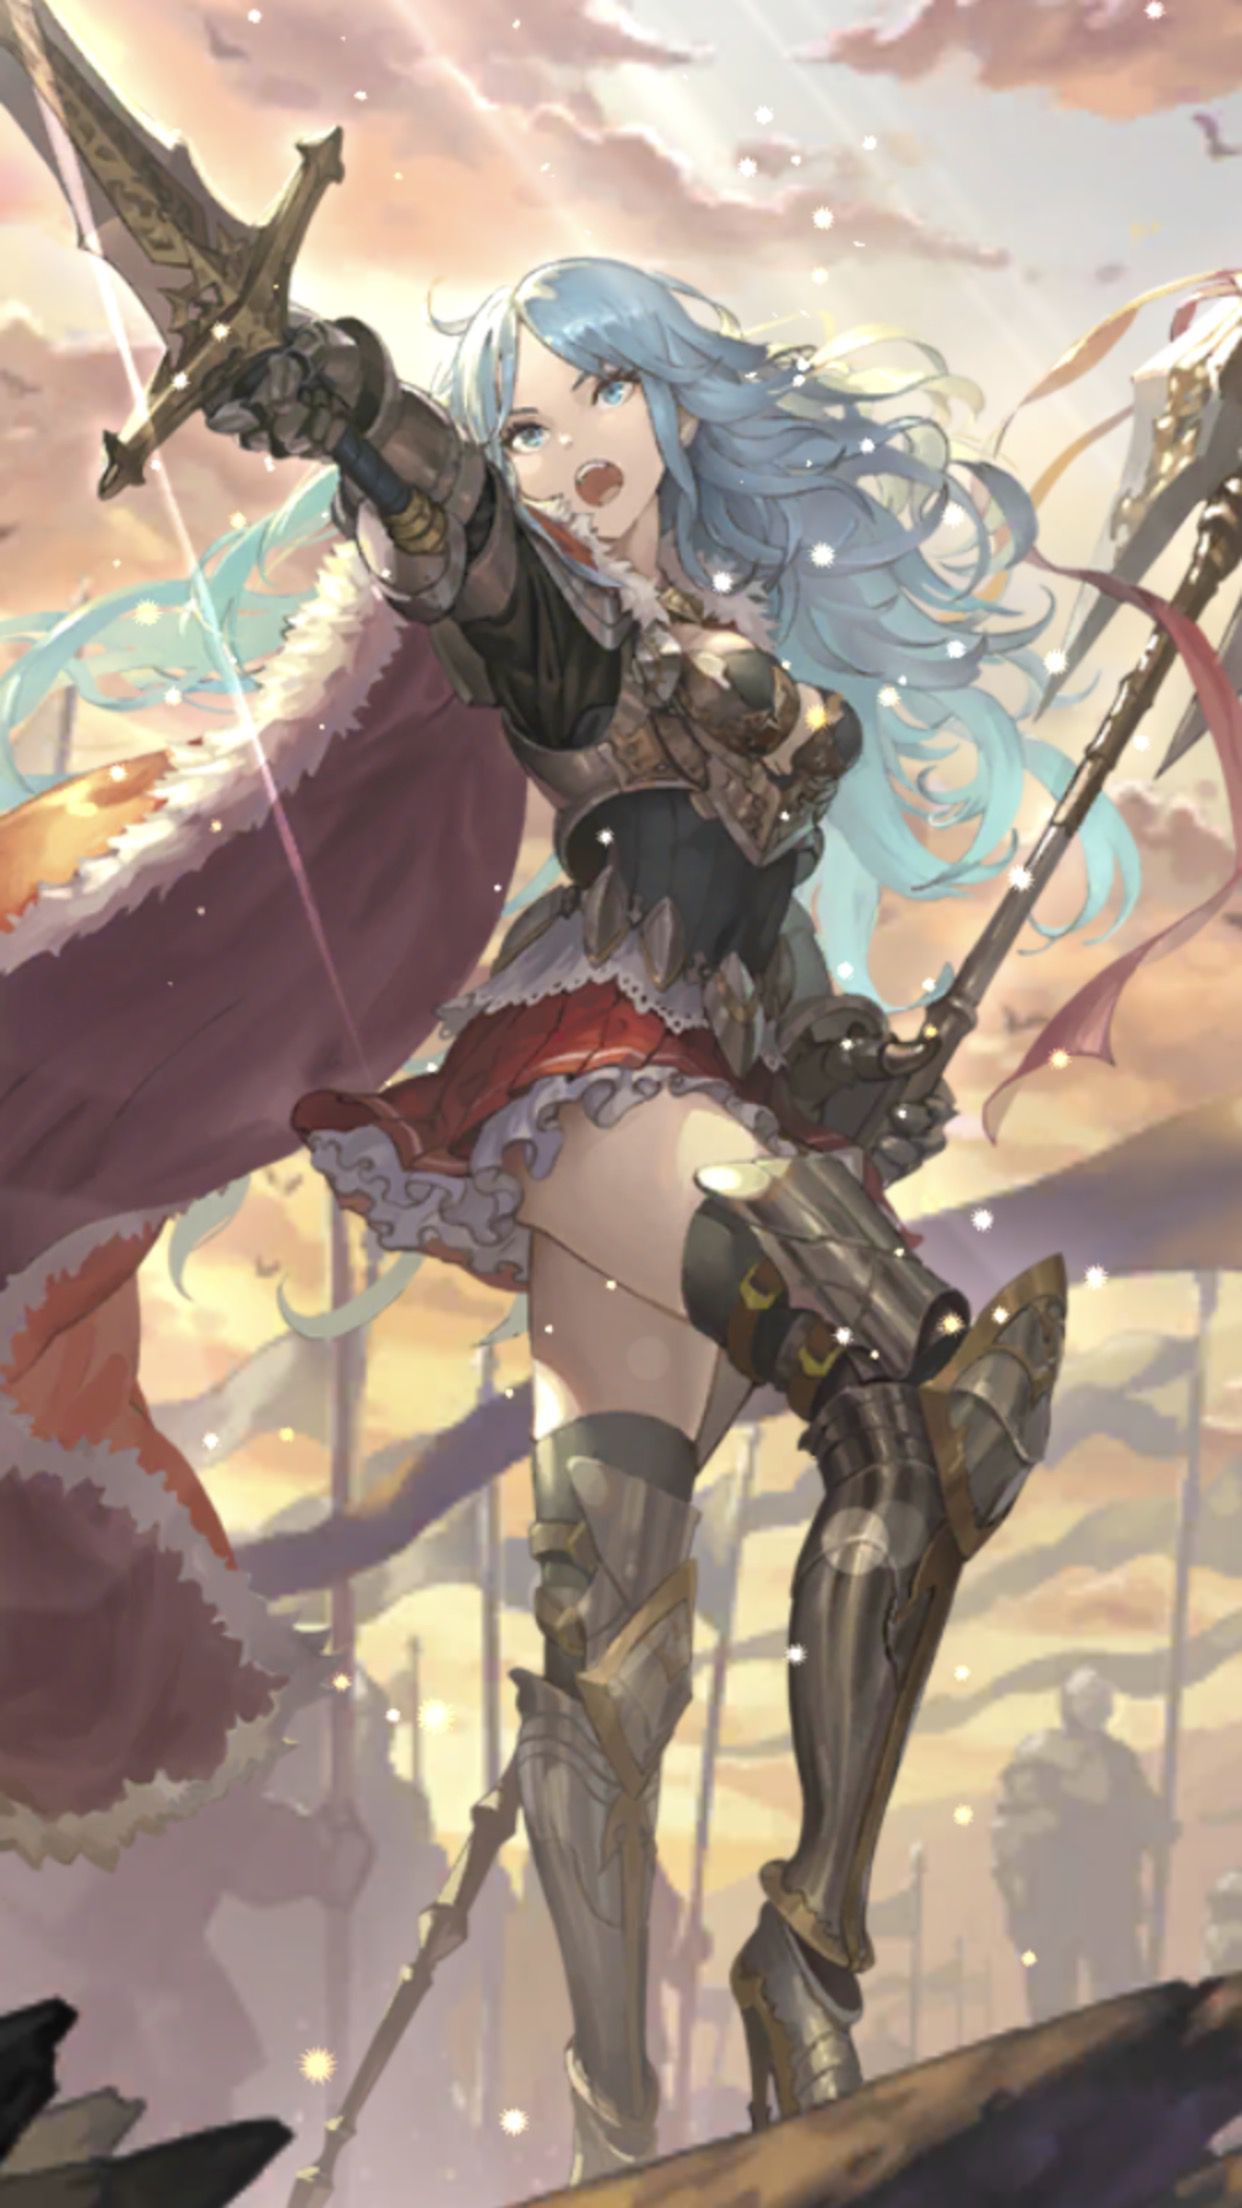 【Image】Female knight wears skirt on the battlefield 7